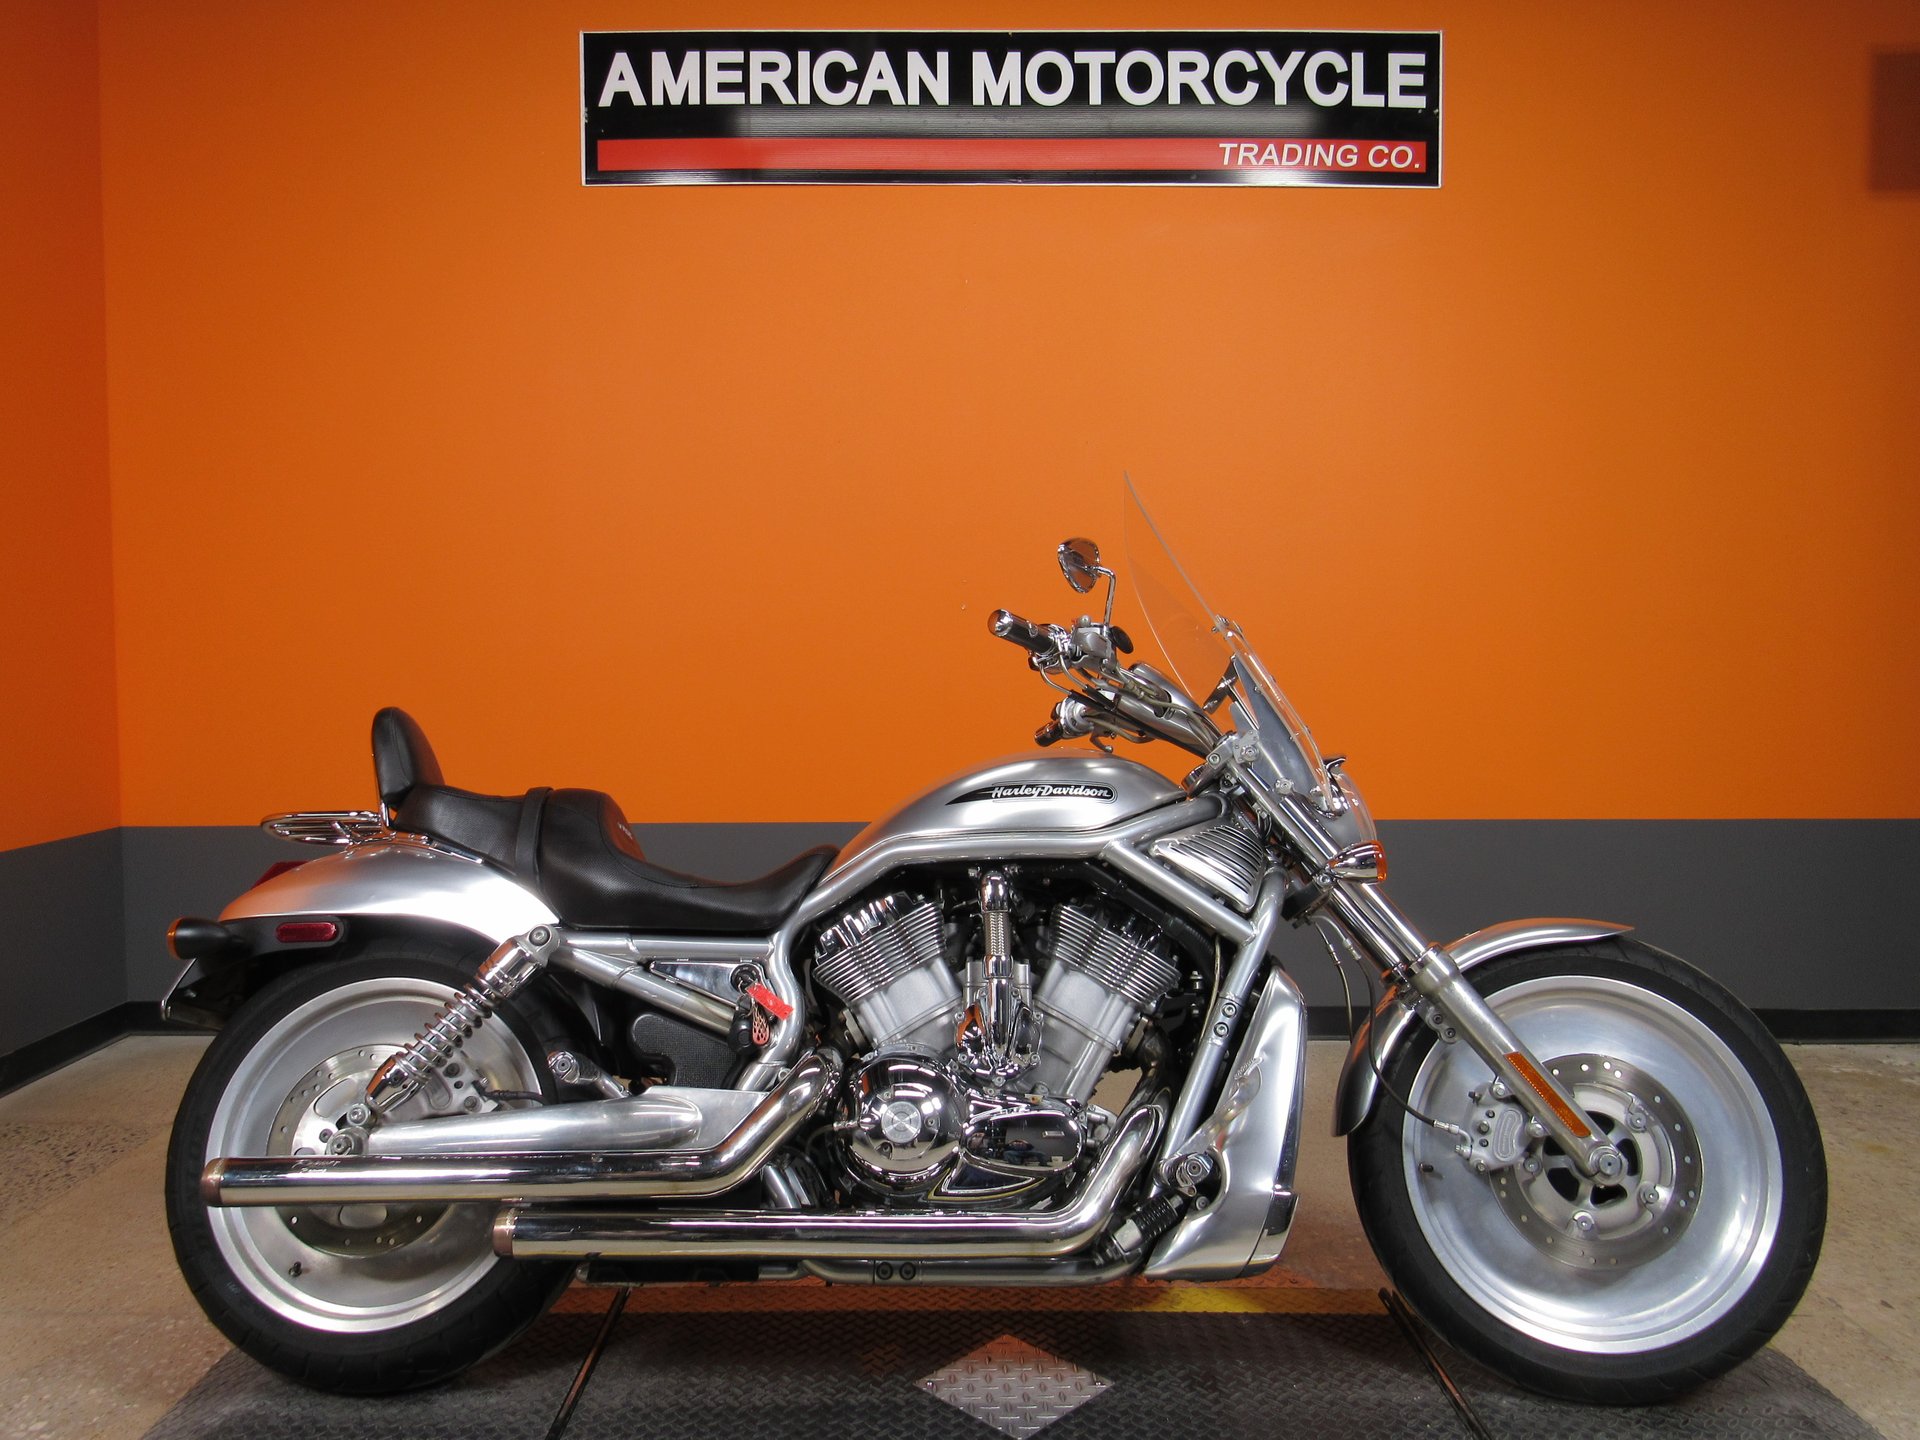 2005 Harley-Davidson V-Rod | American Motorcycle Trading Company - Used Harley  Davidson Motorcycles